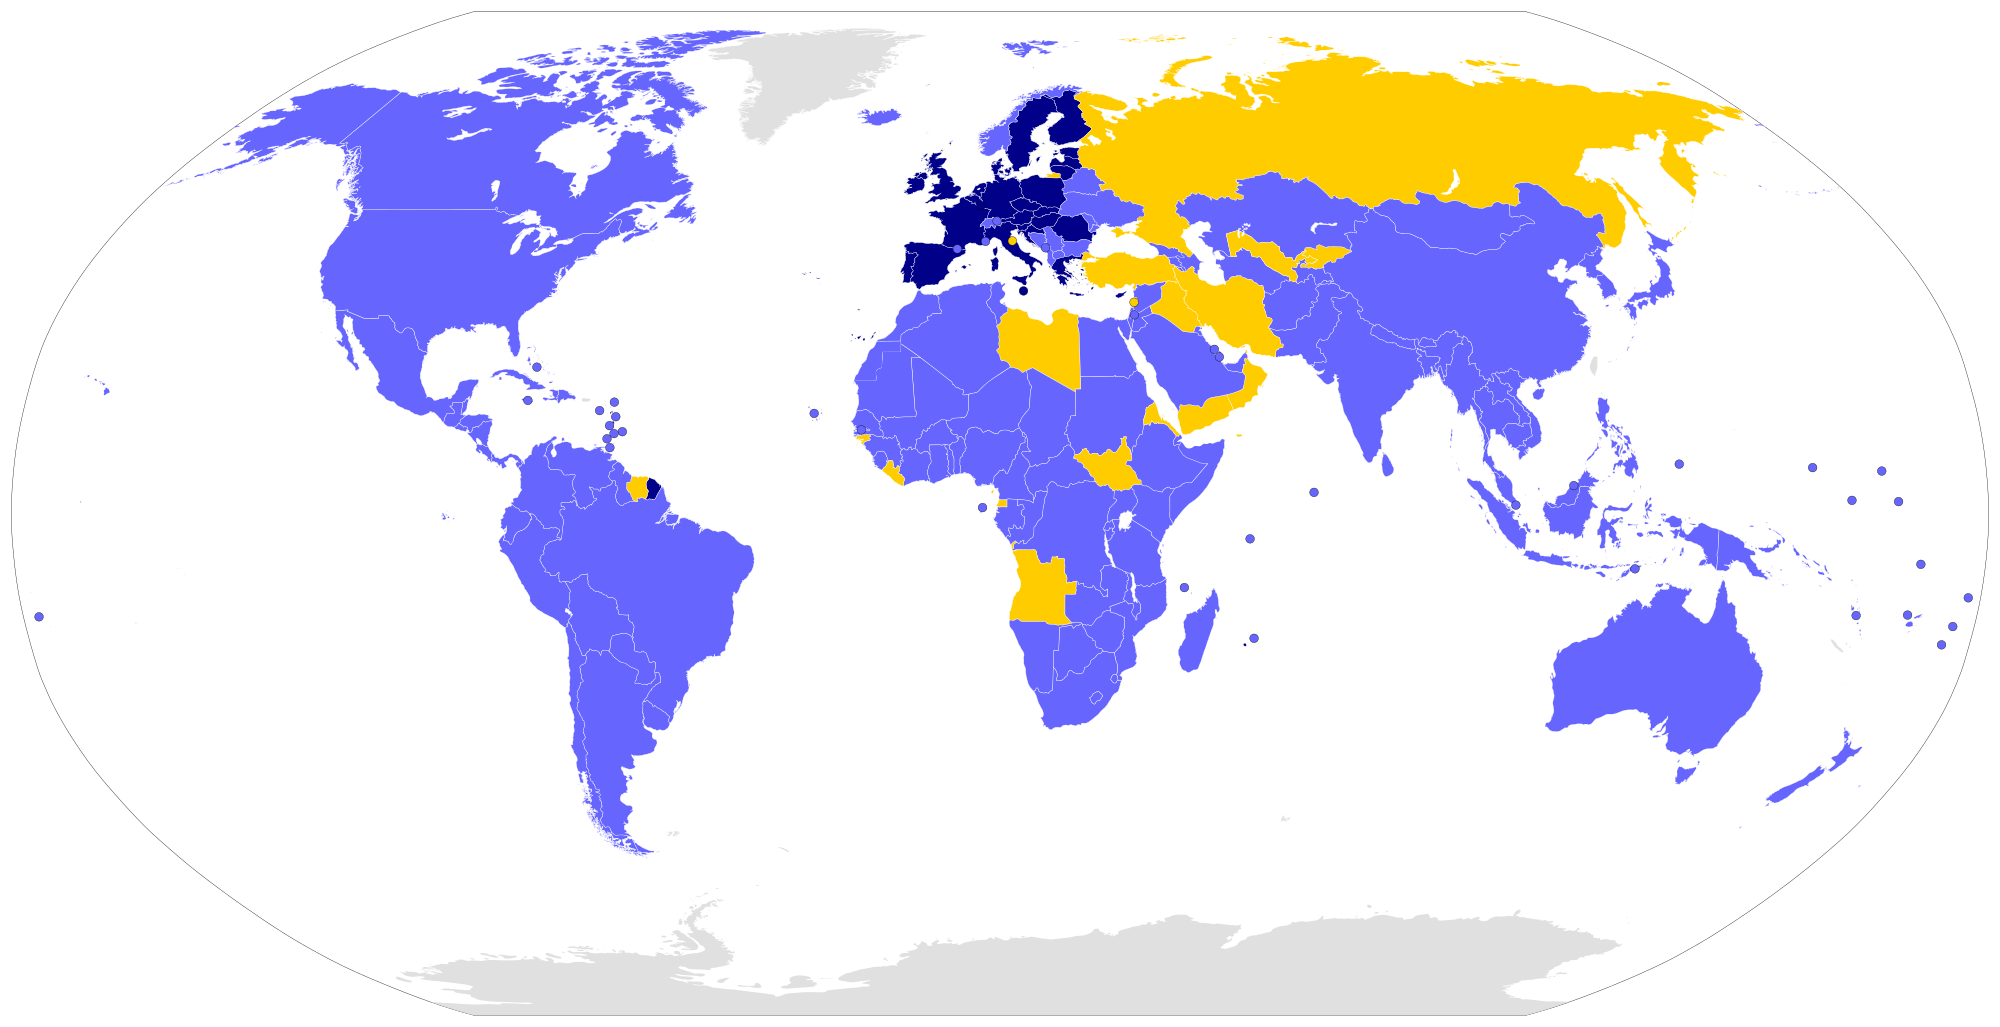 Paris Agreement Wikipedia